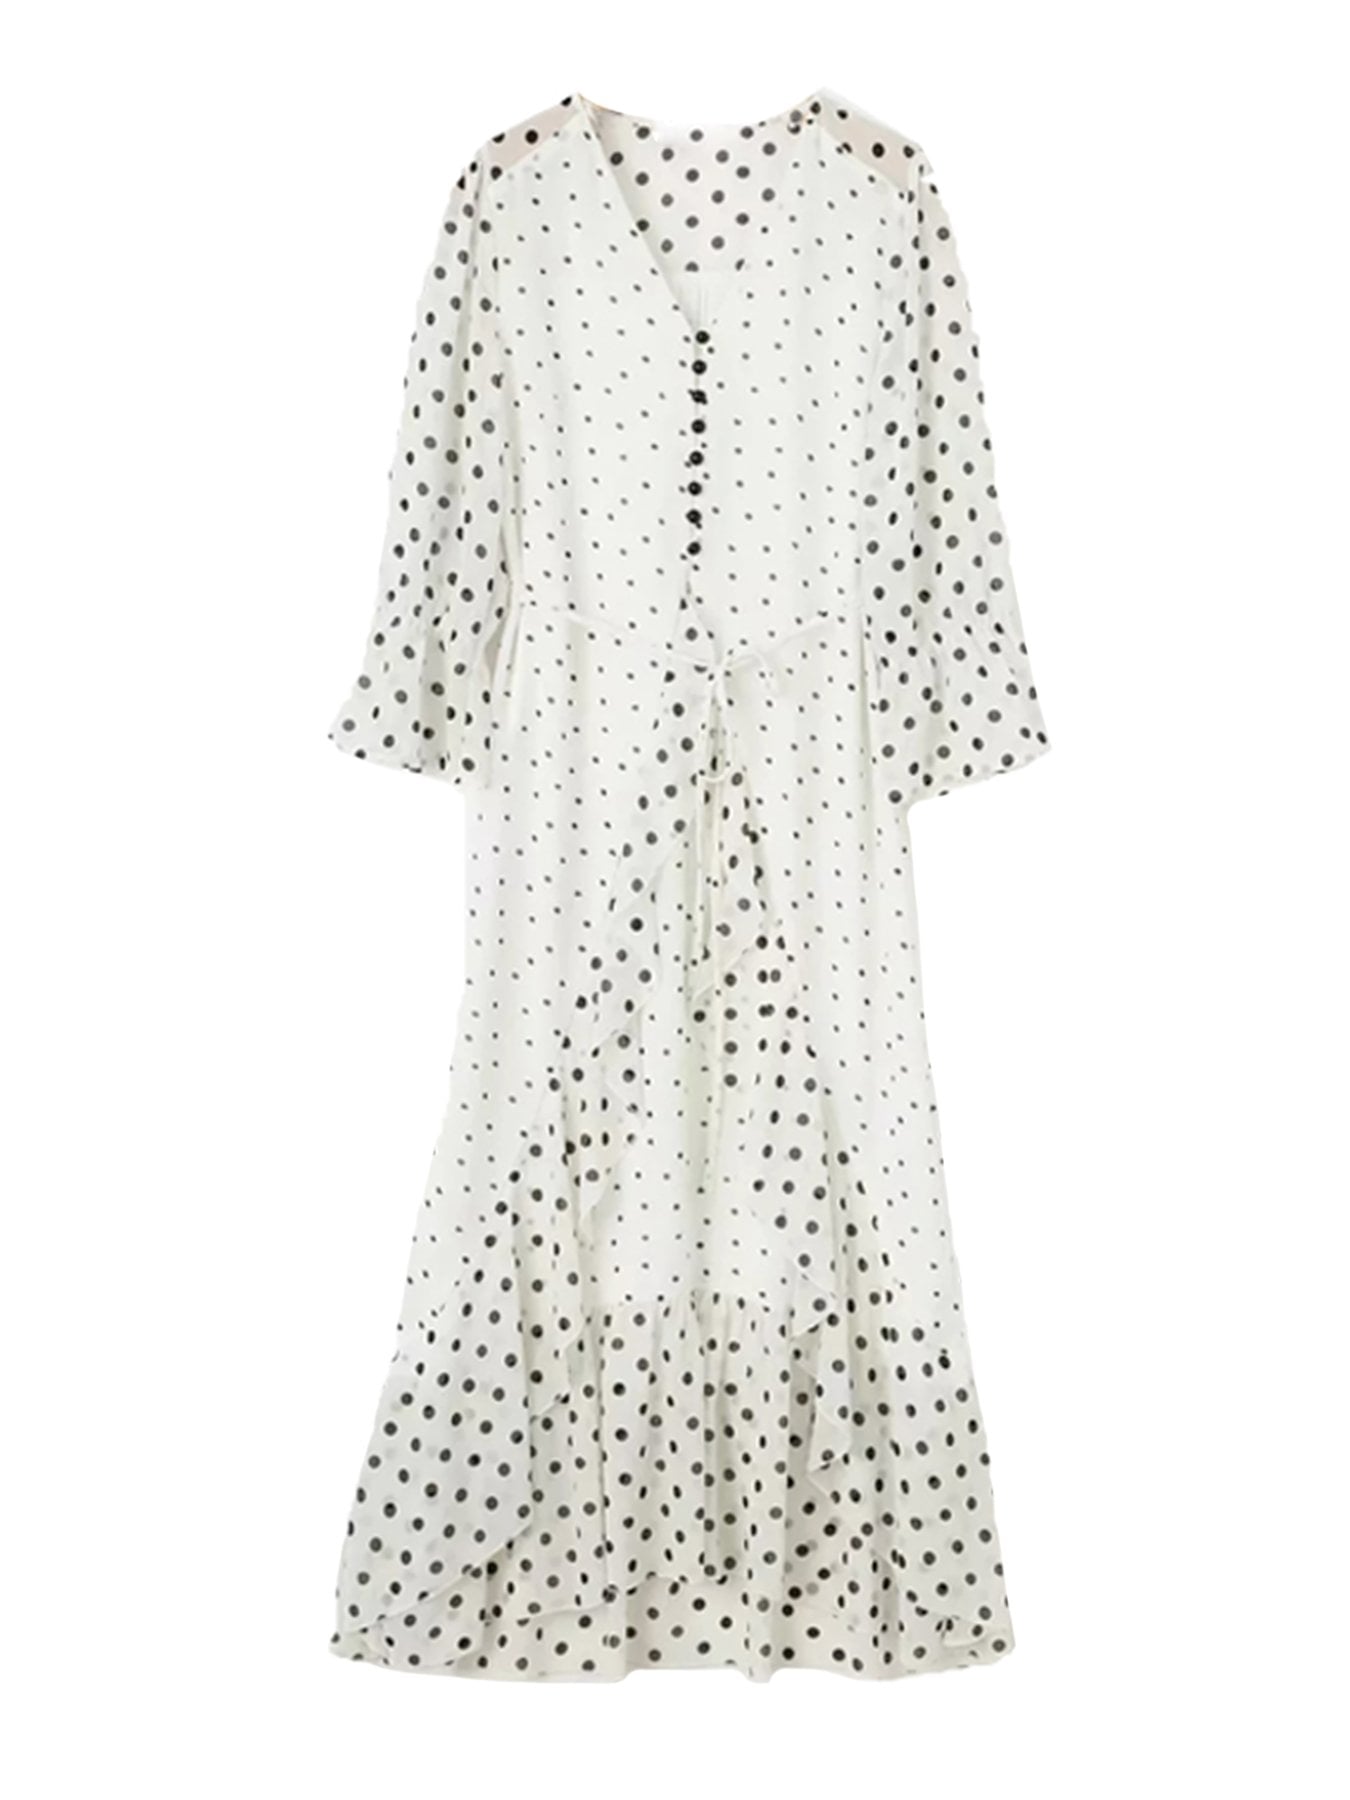 Zara Polka Dot Dress Review - StyleDahlia Outfits